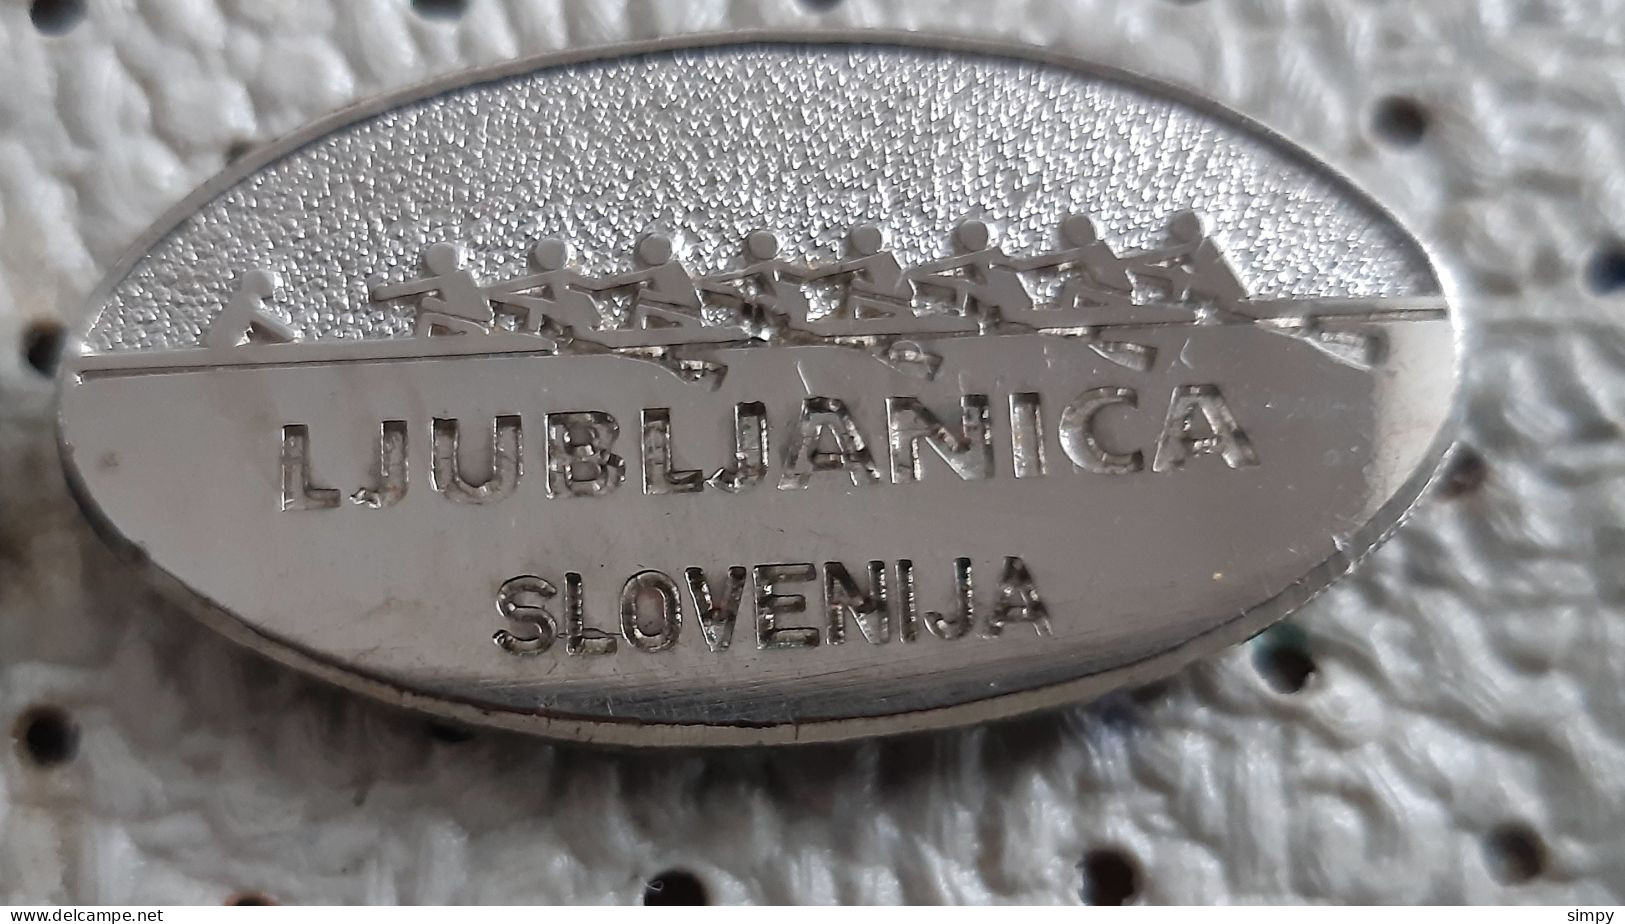 Rowing Club RC Ljubljanica Slovenia Badge Pin - Rowing